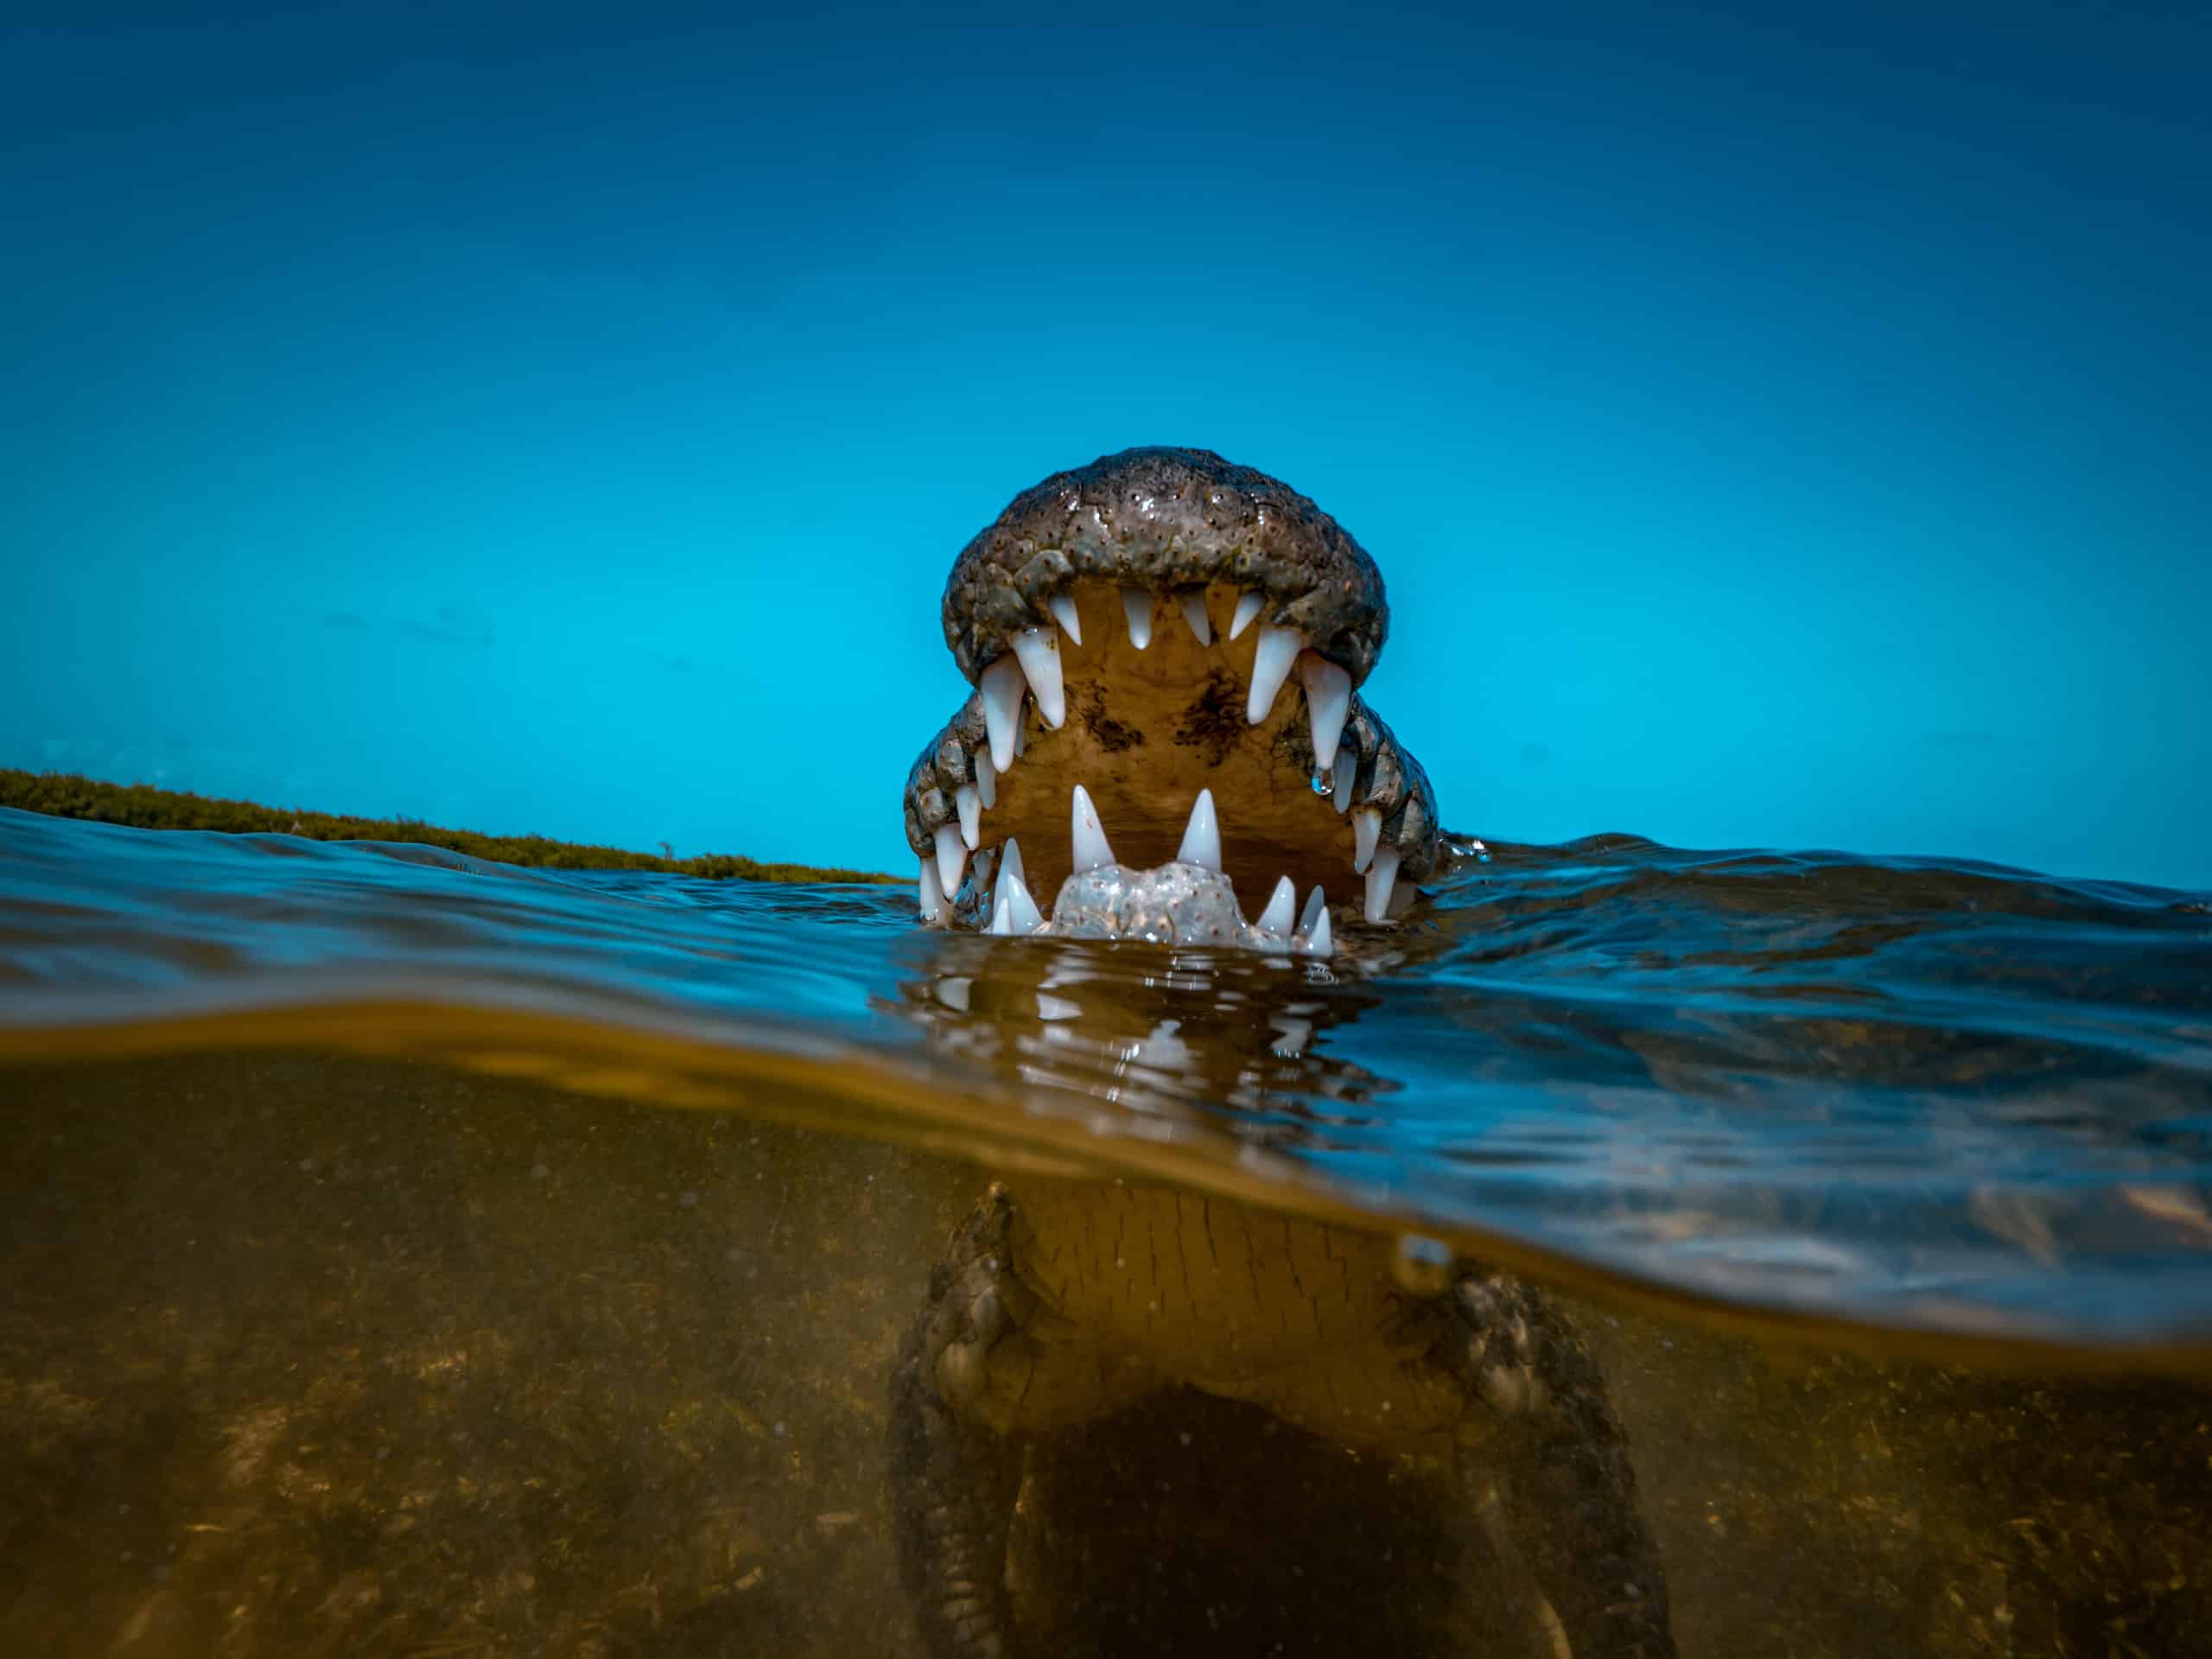 Saltwater crocodile in water